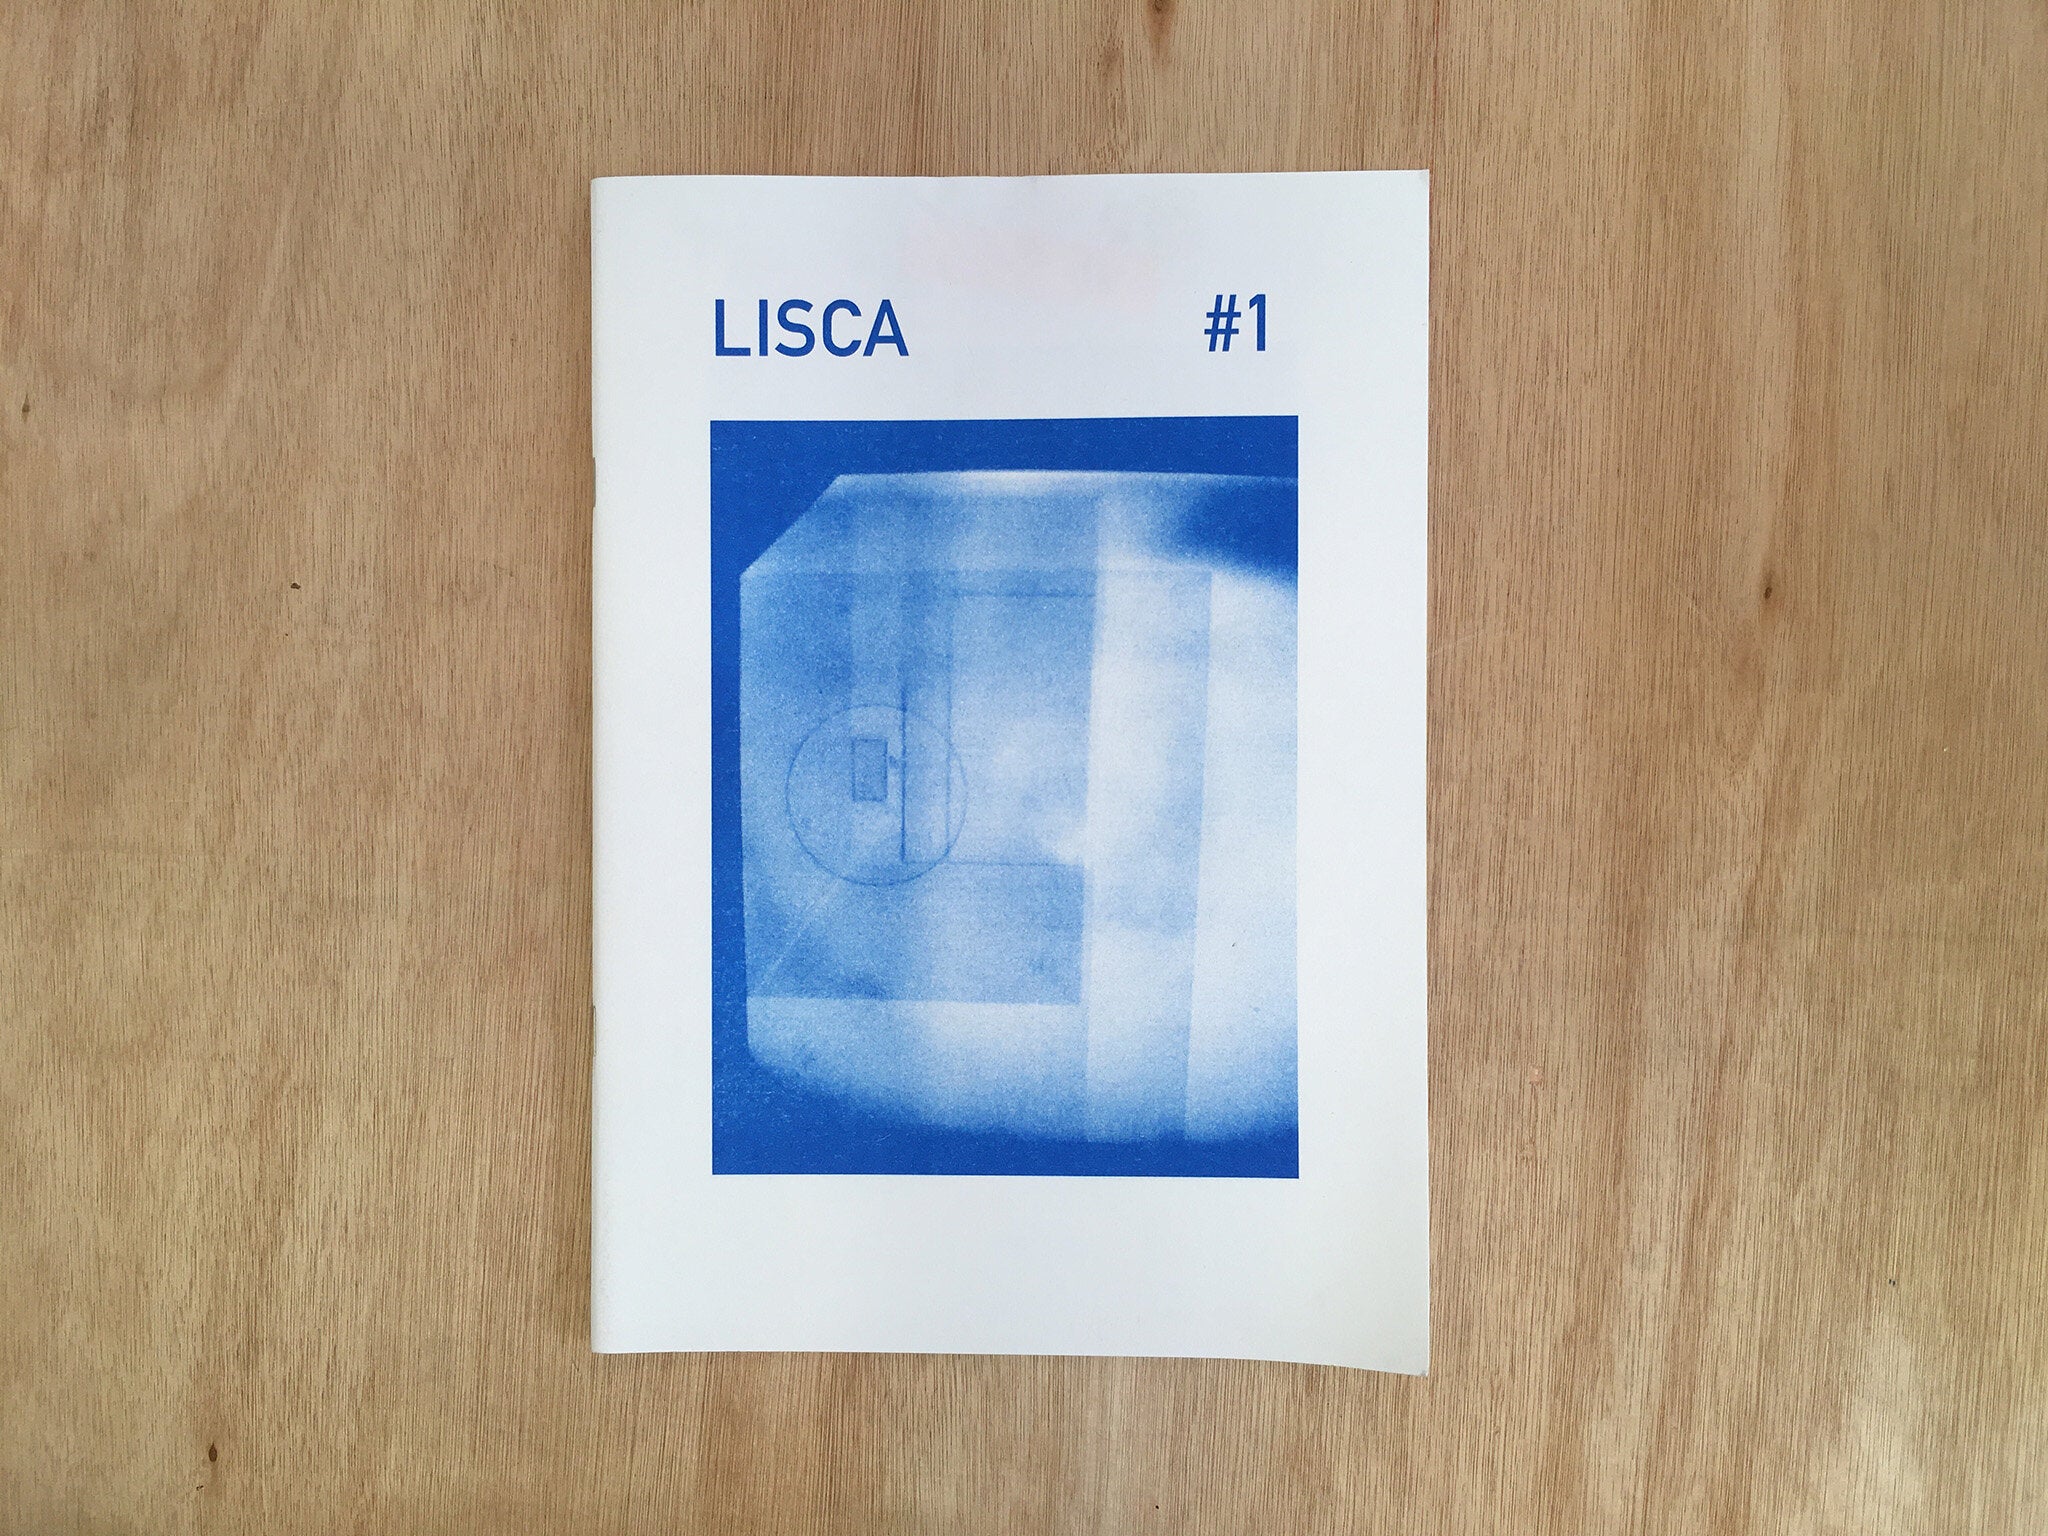 LISCA #1 by Camilla Brueton and Lisa Solovieva